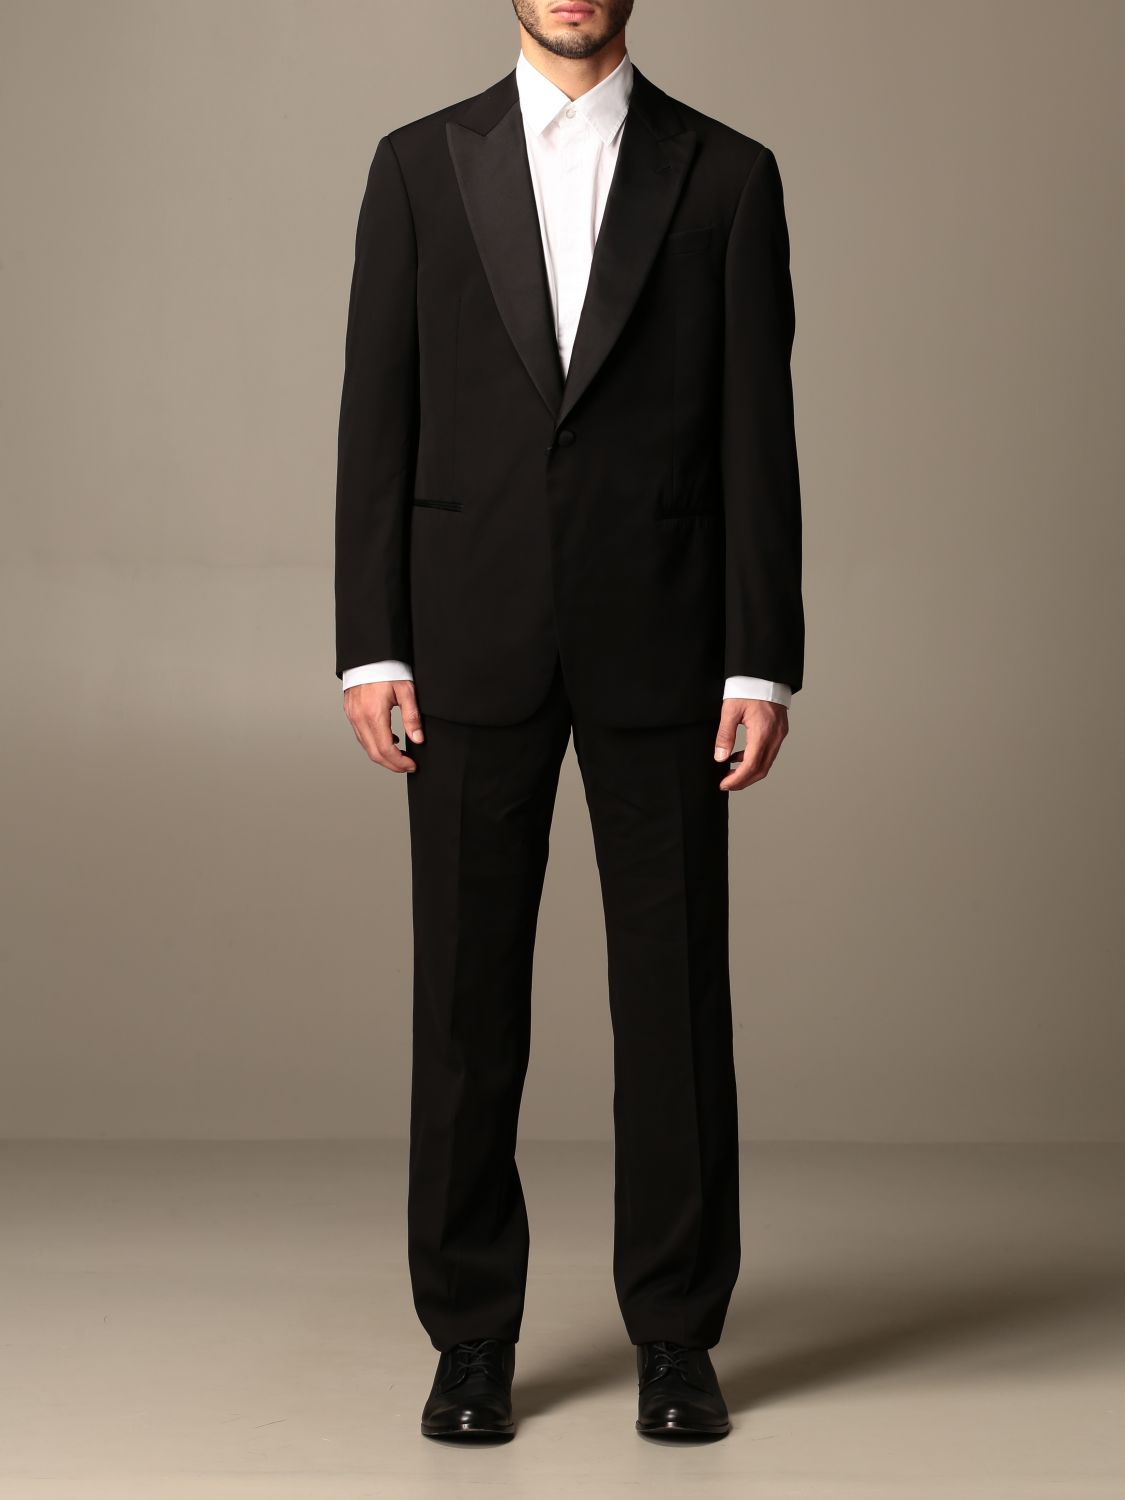 Giorgio Armani Outlet: tuxedo suit in virgin wool - Black | Giorgio Armani  suit 8WGAS001 T0075 online on 